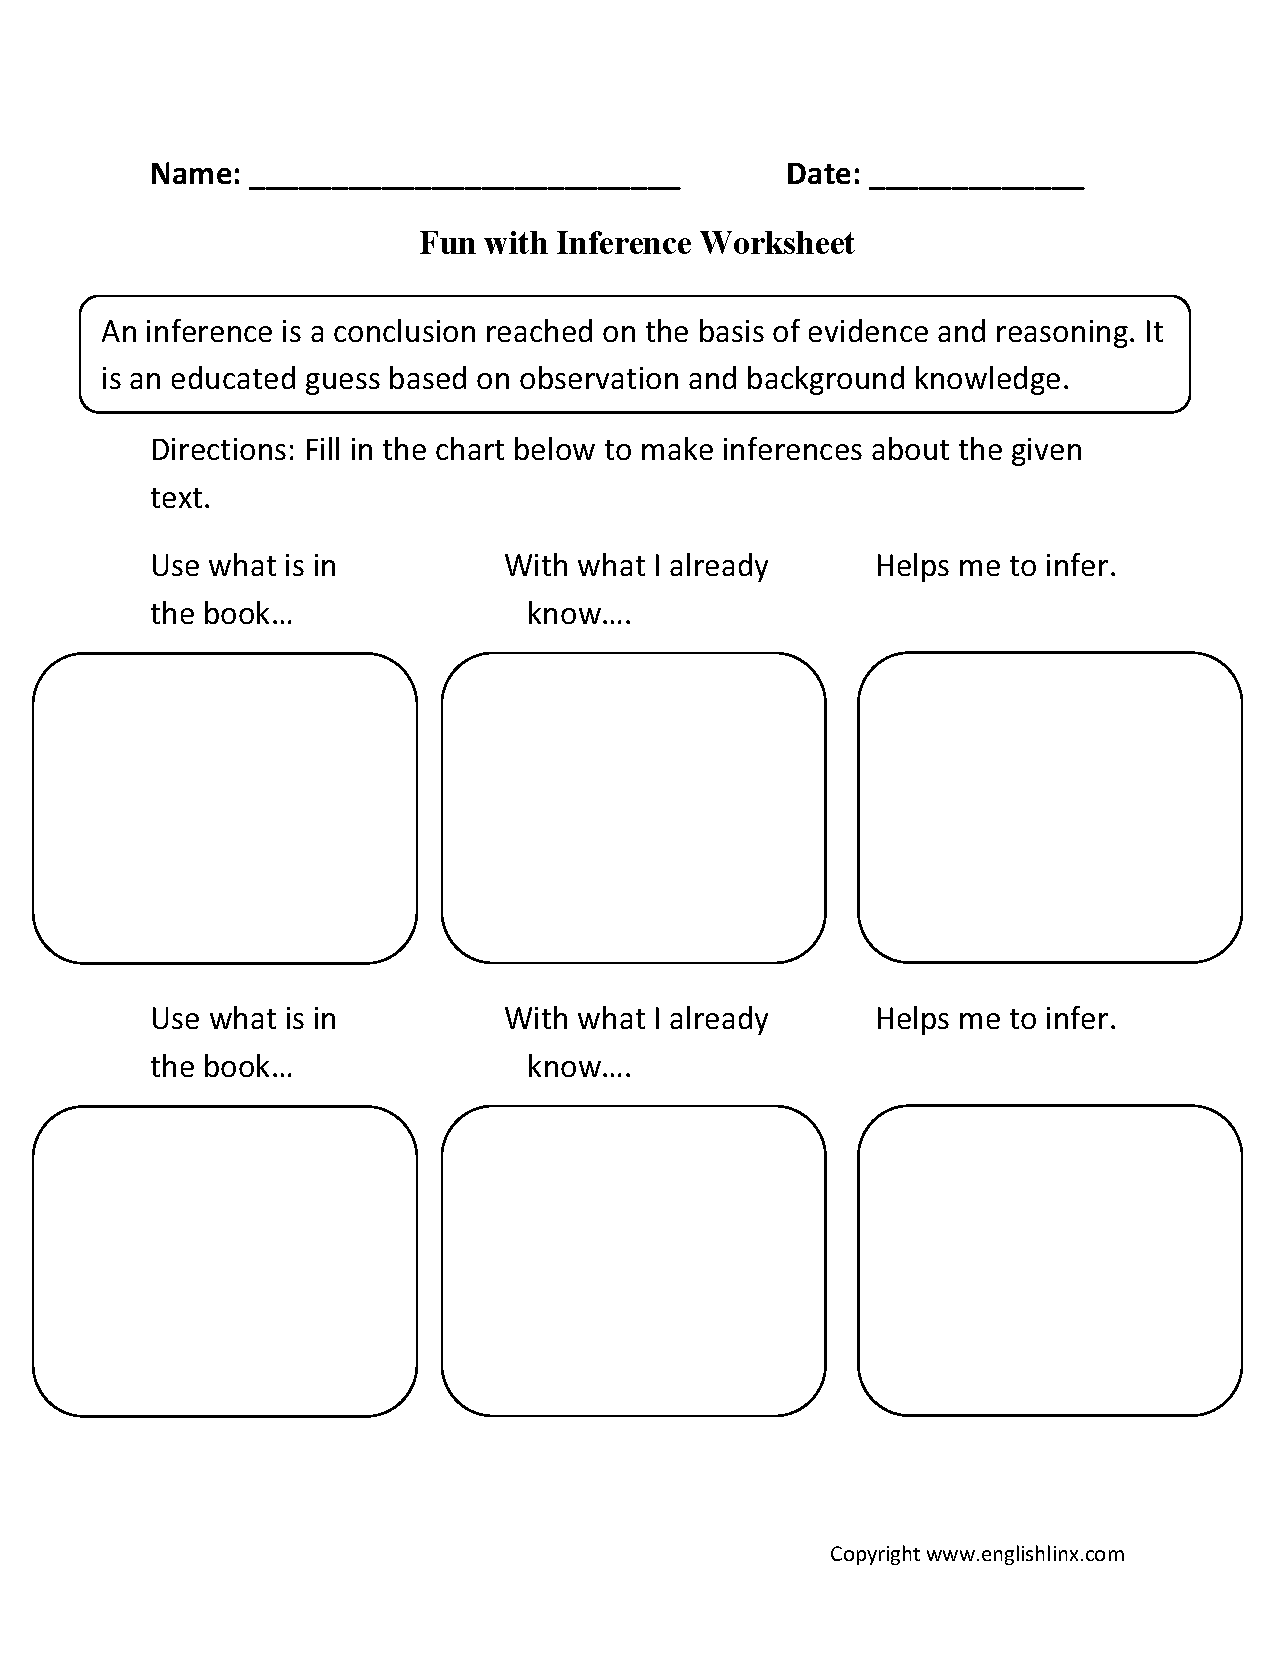 reading-worksheets-inference-worksheets